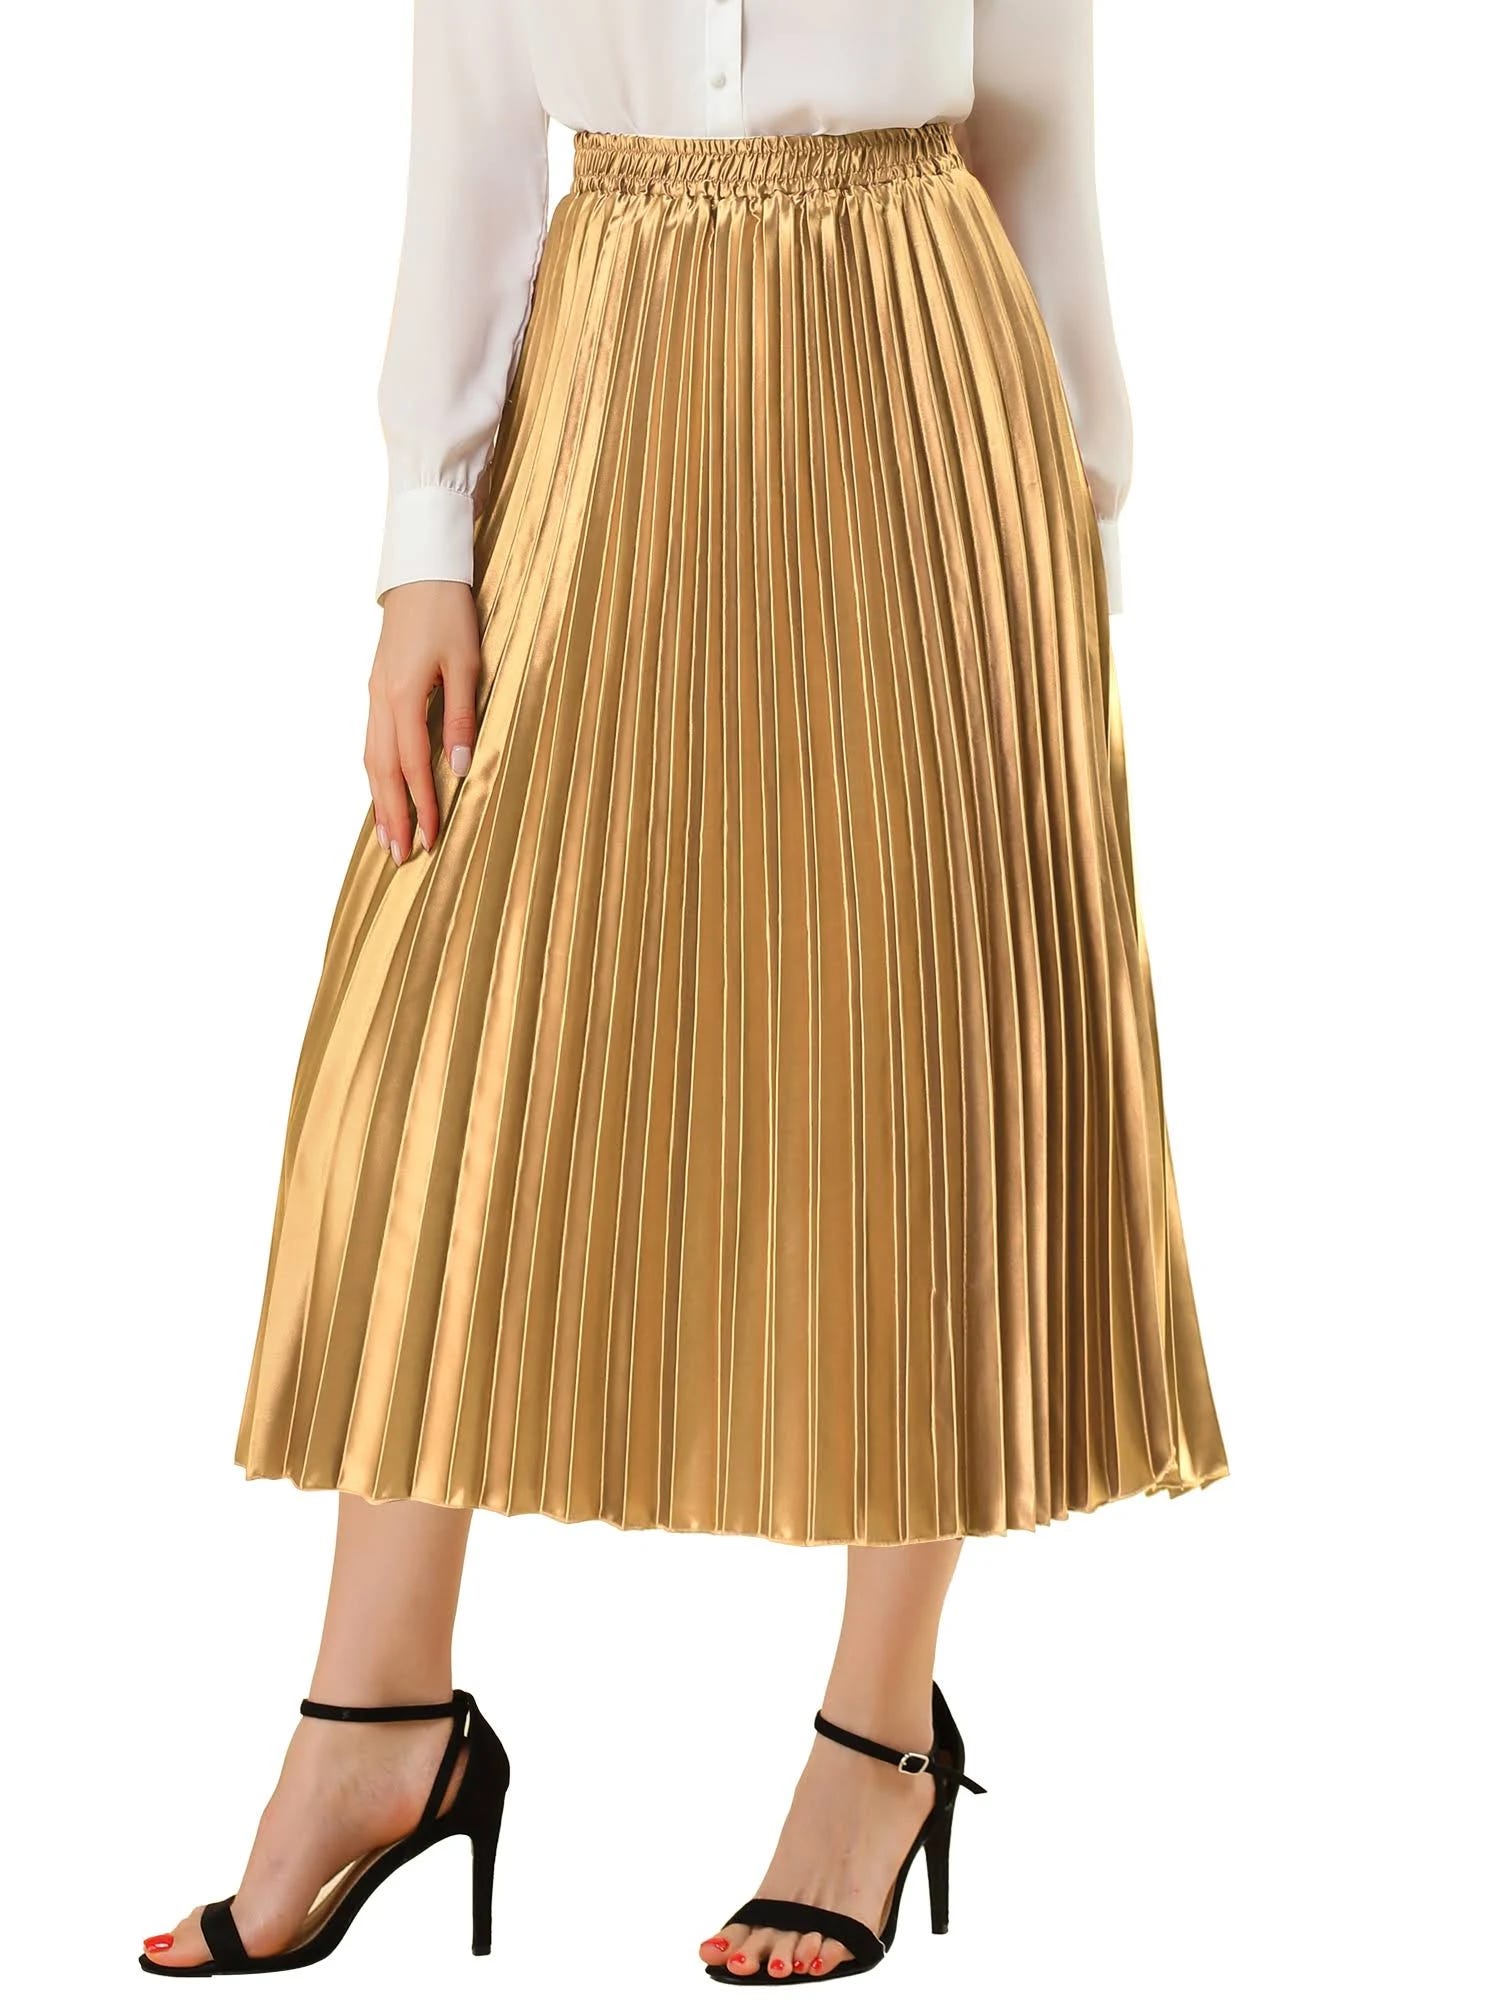 Metallic High Waist Pleated Midi Skirt for Formal Events | Image